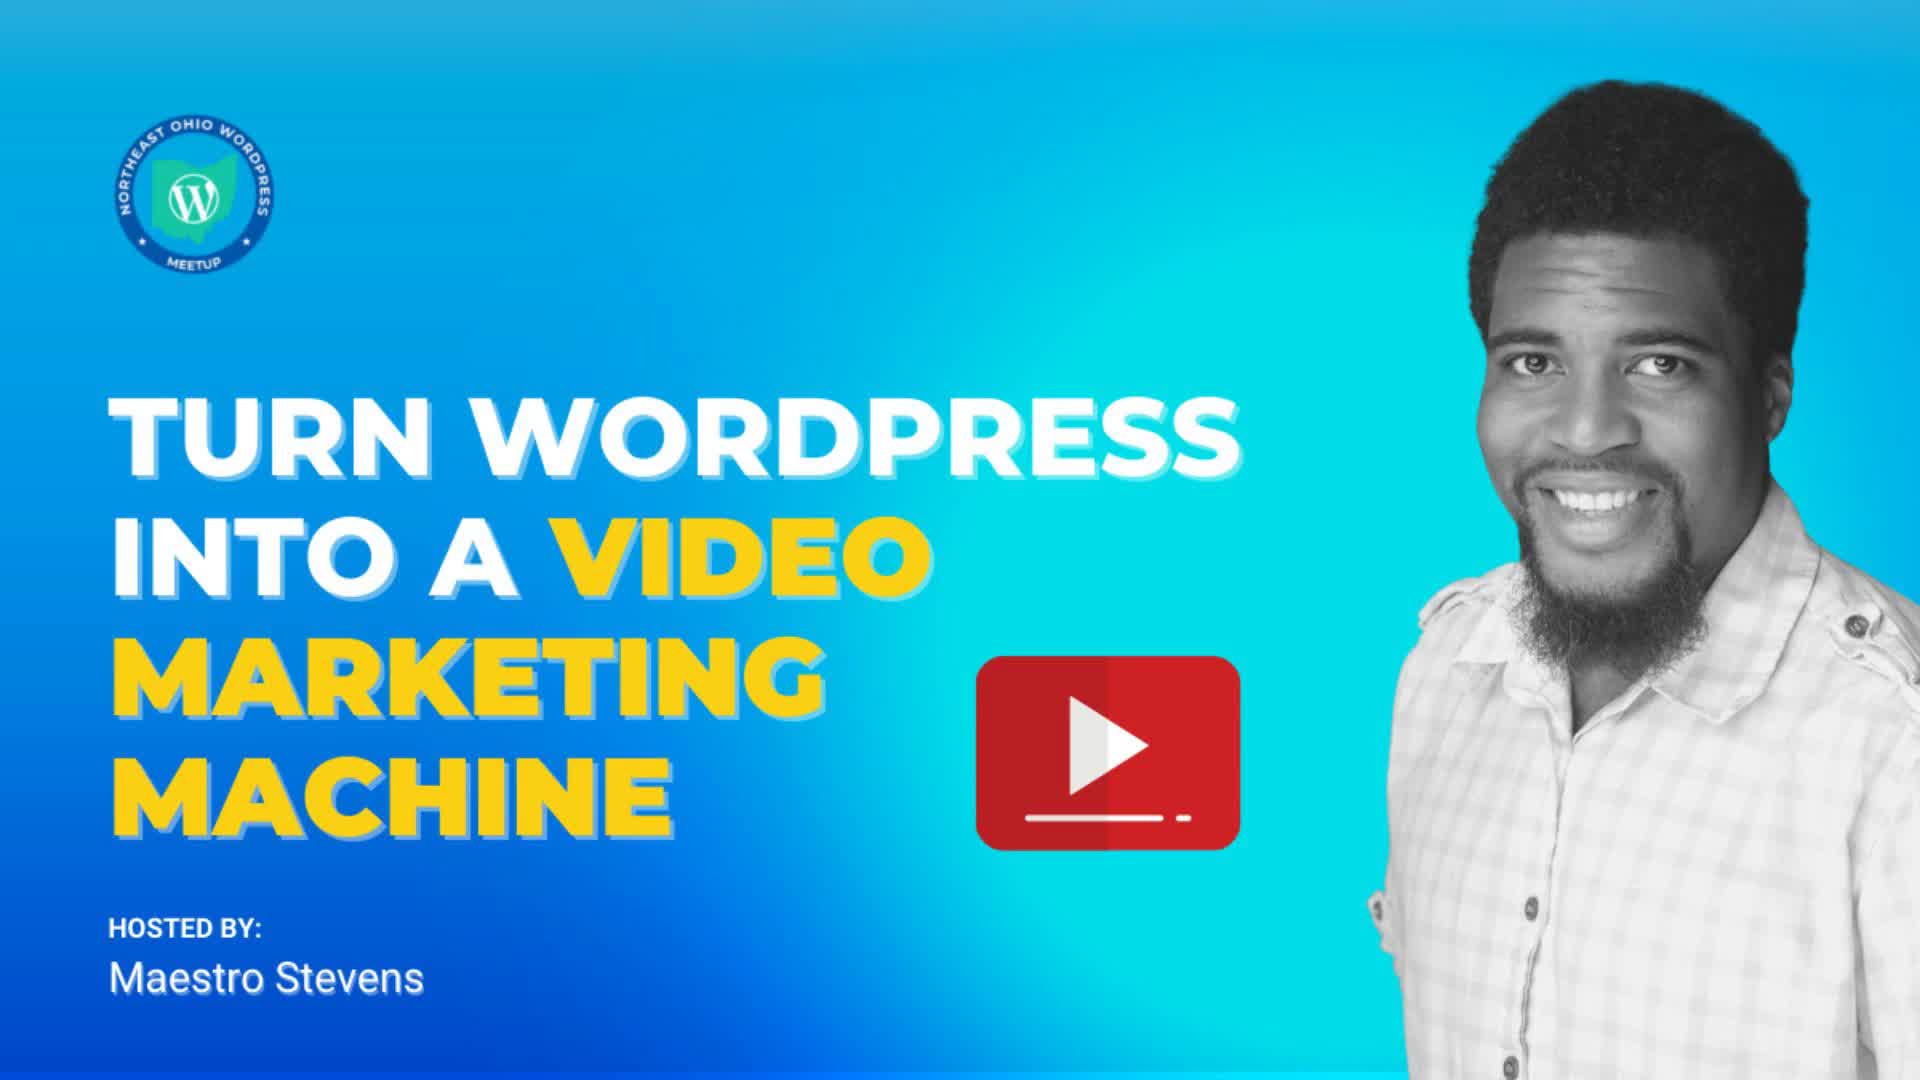 Turn WordPress into a video marketing machine